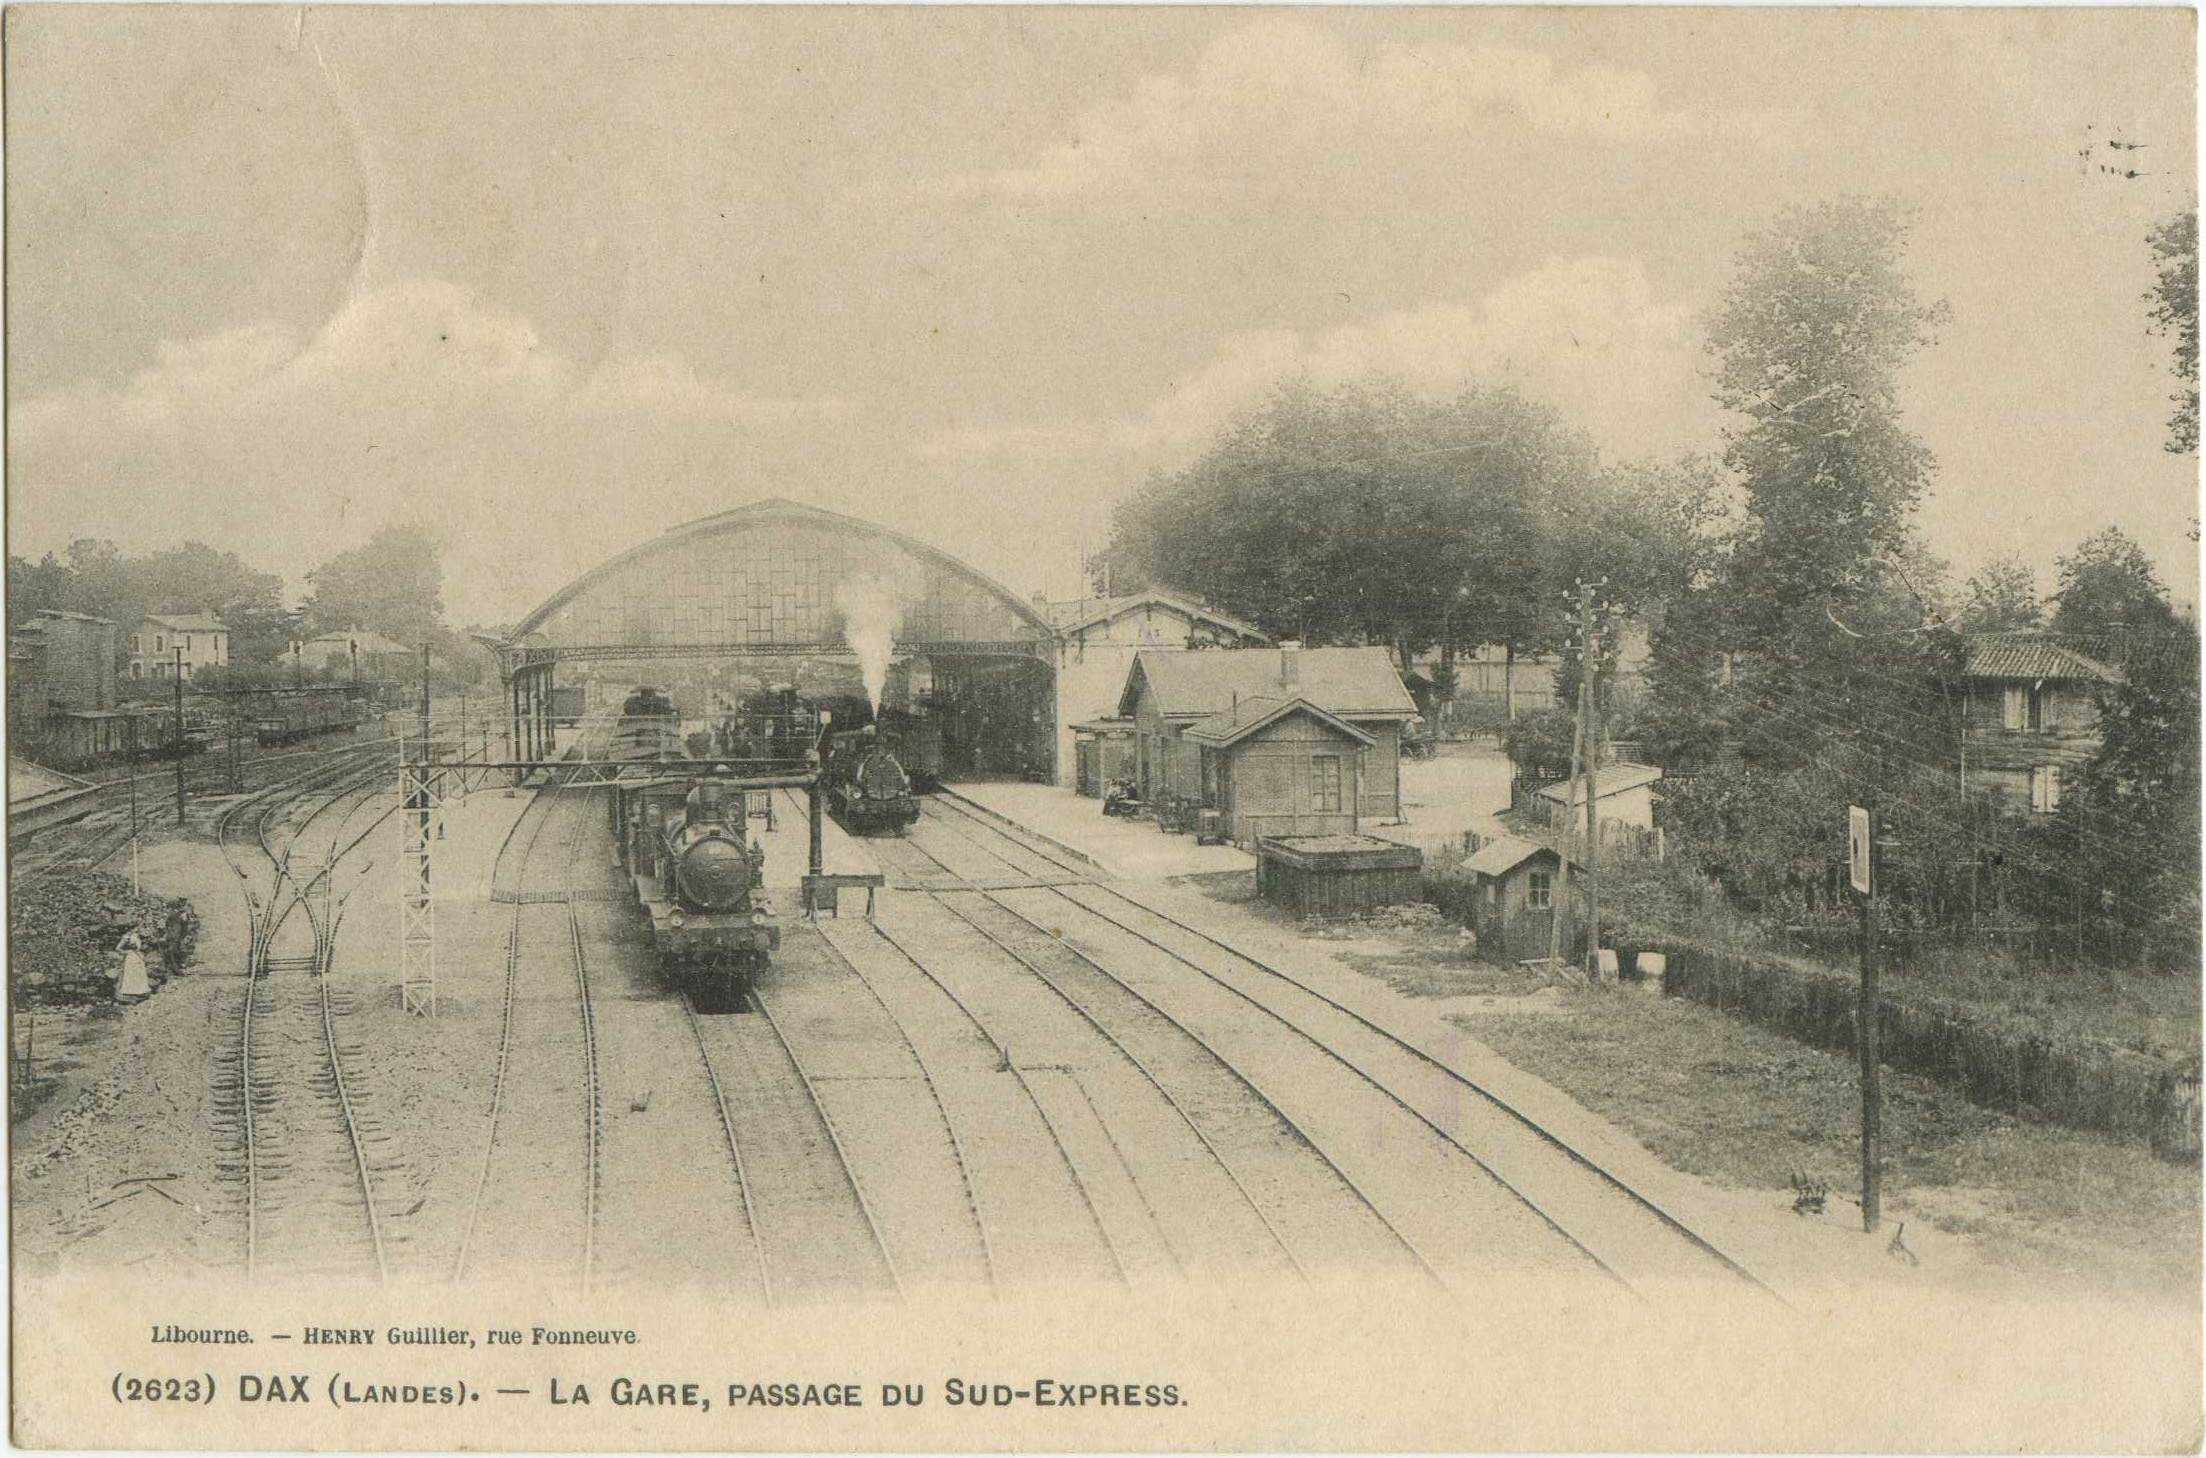 Dax - La Gare, passage du Sud-Express.